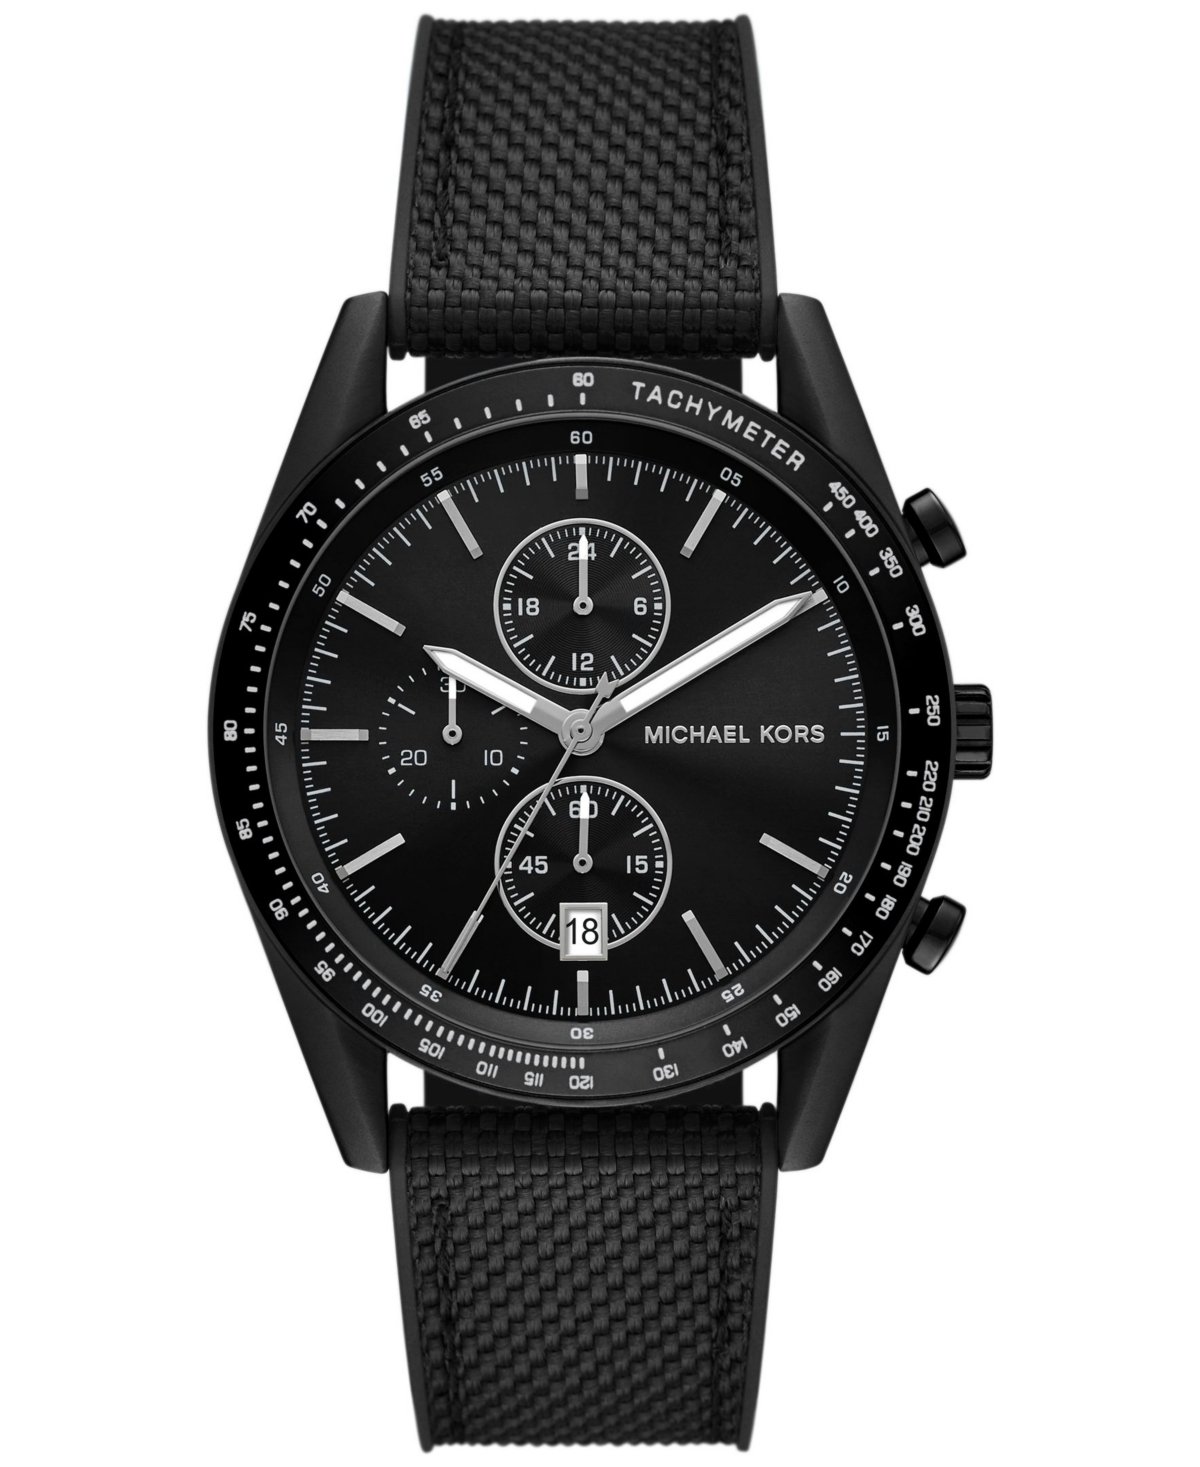 Michael Kors Men's Accelerator Black Stainless Steel & Canvas Chronograph Watch